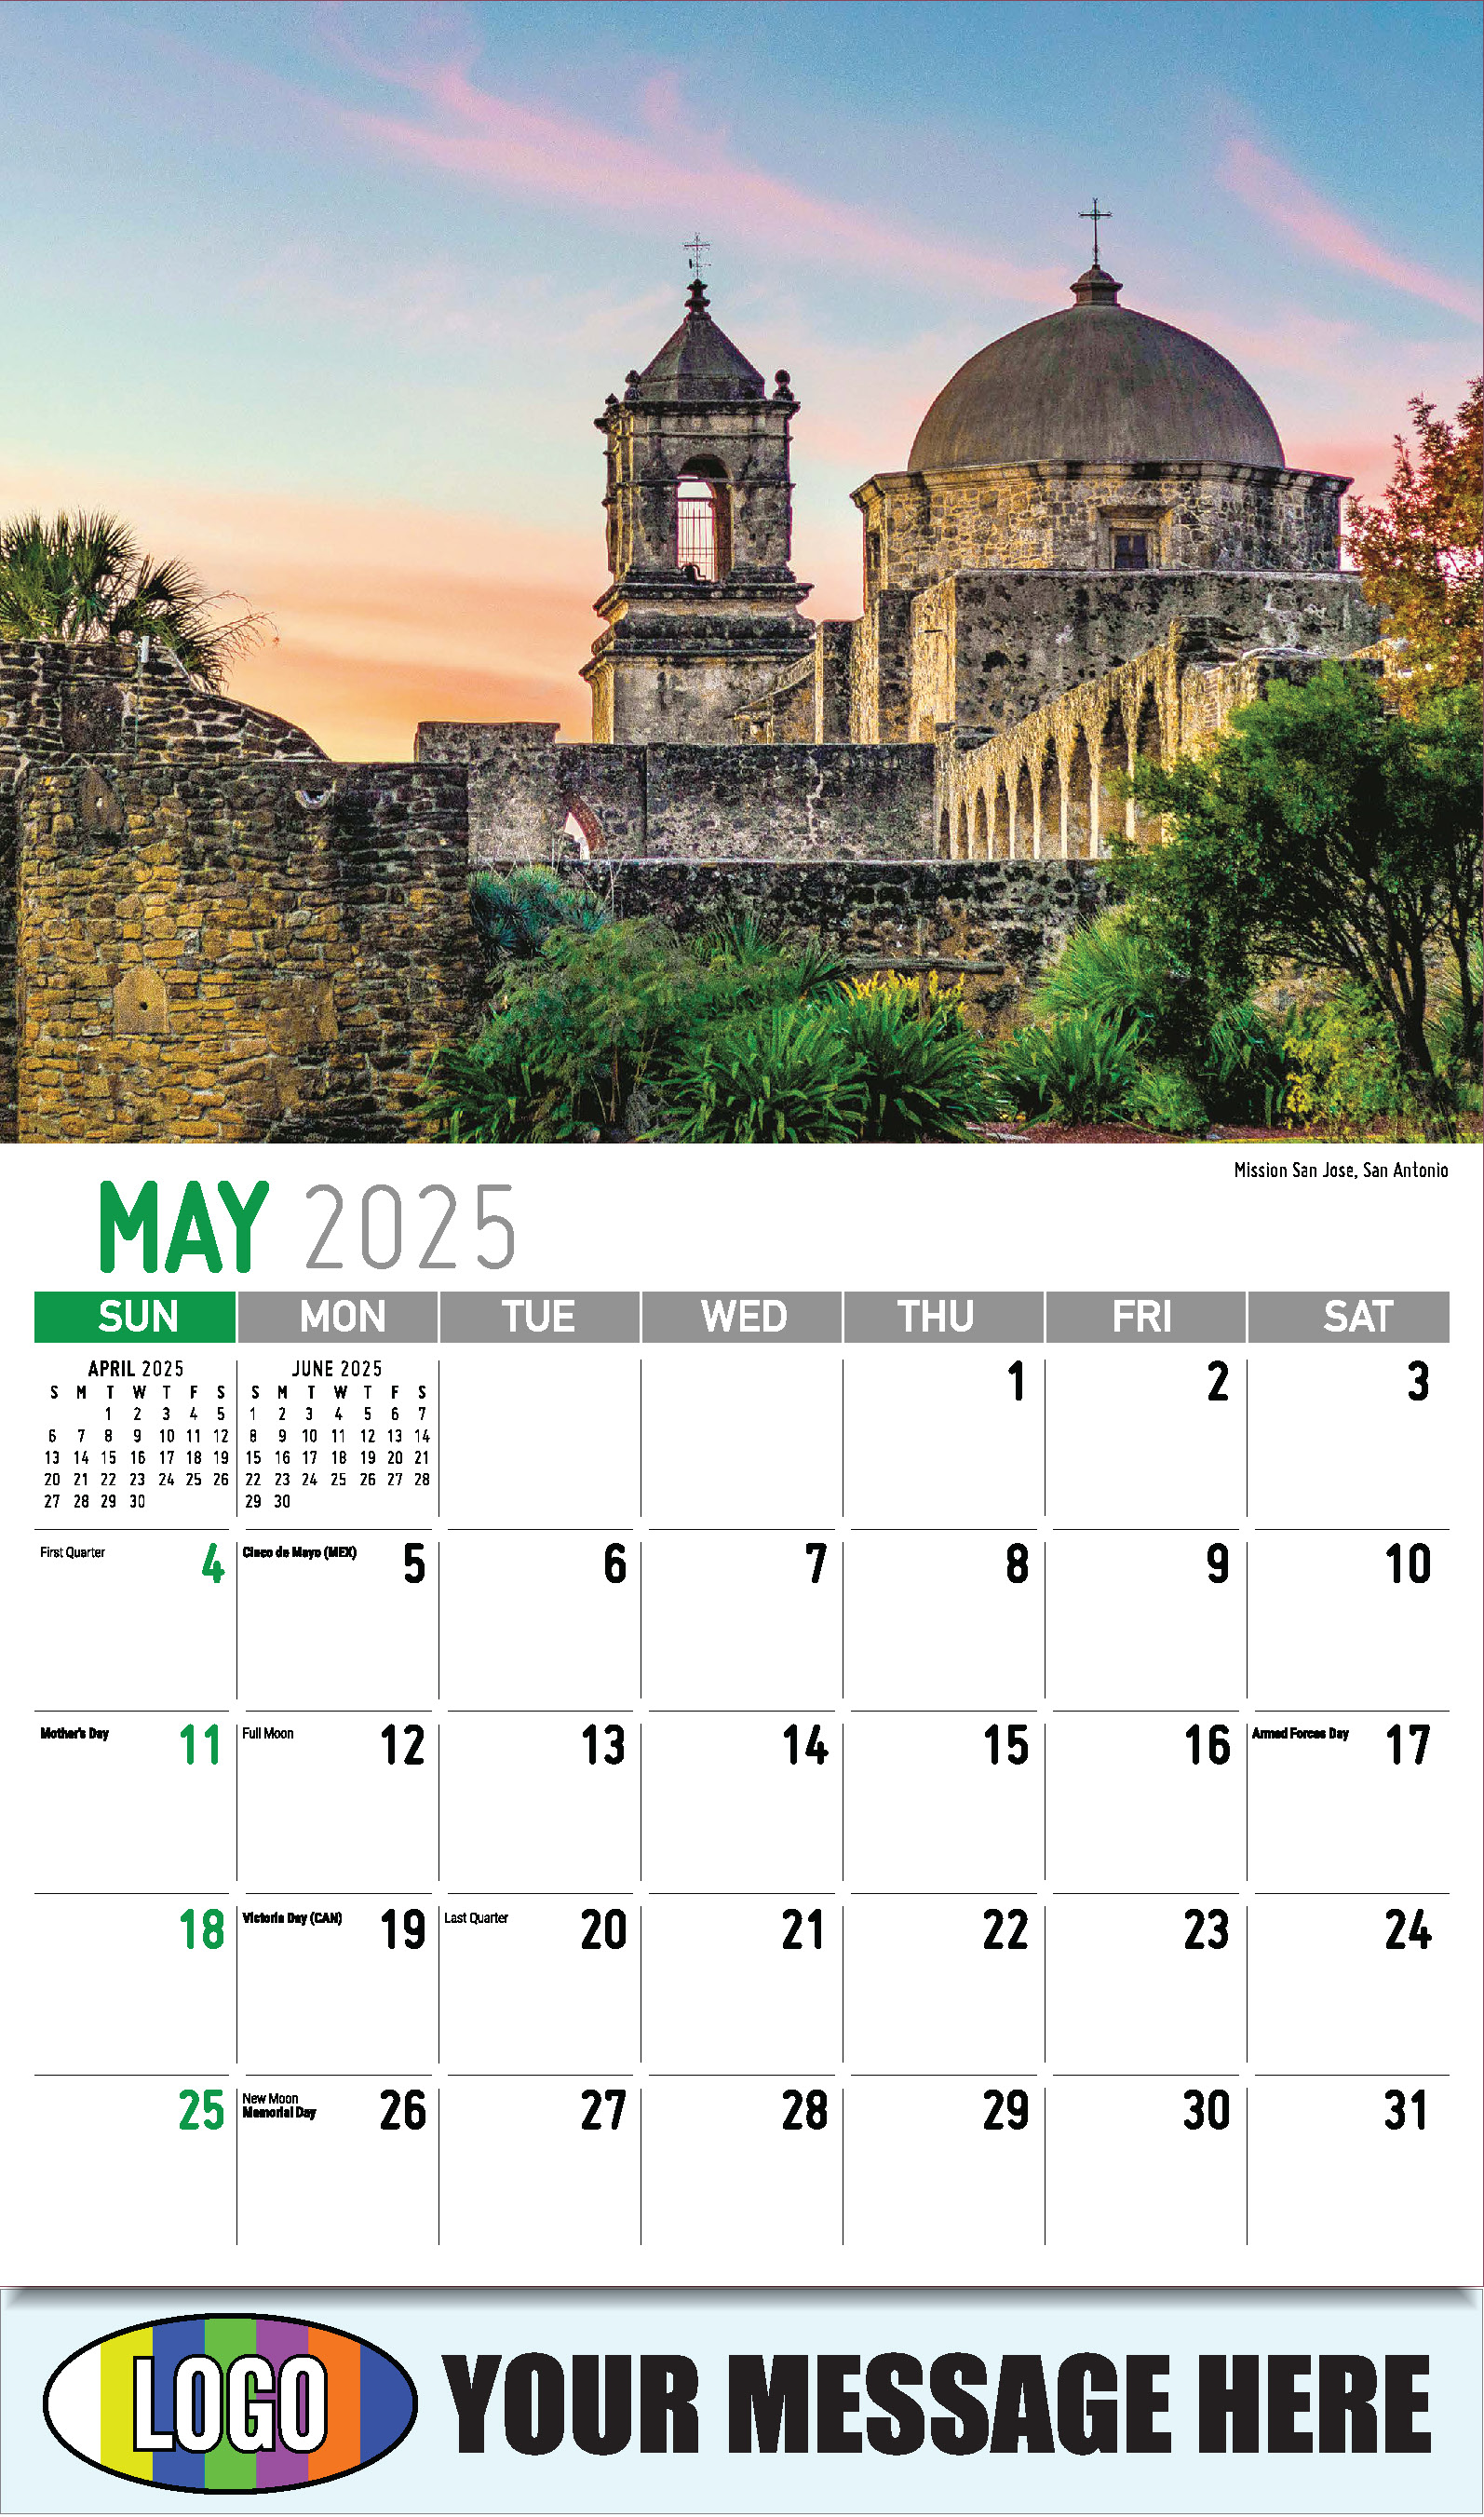 Scenes of Texas 2025 Business Advertising Calendar - May